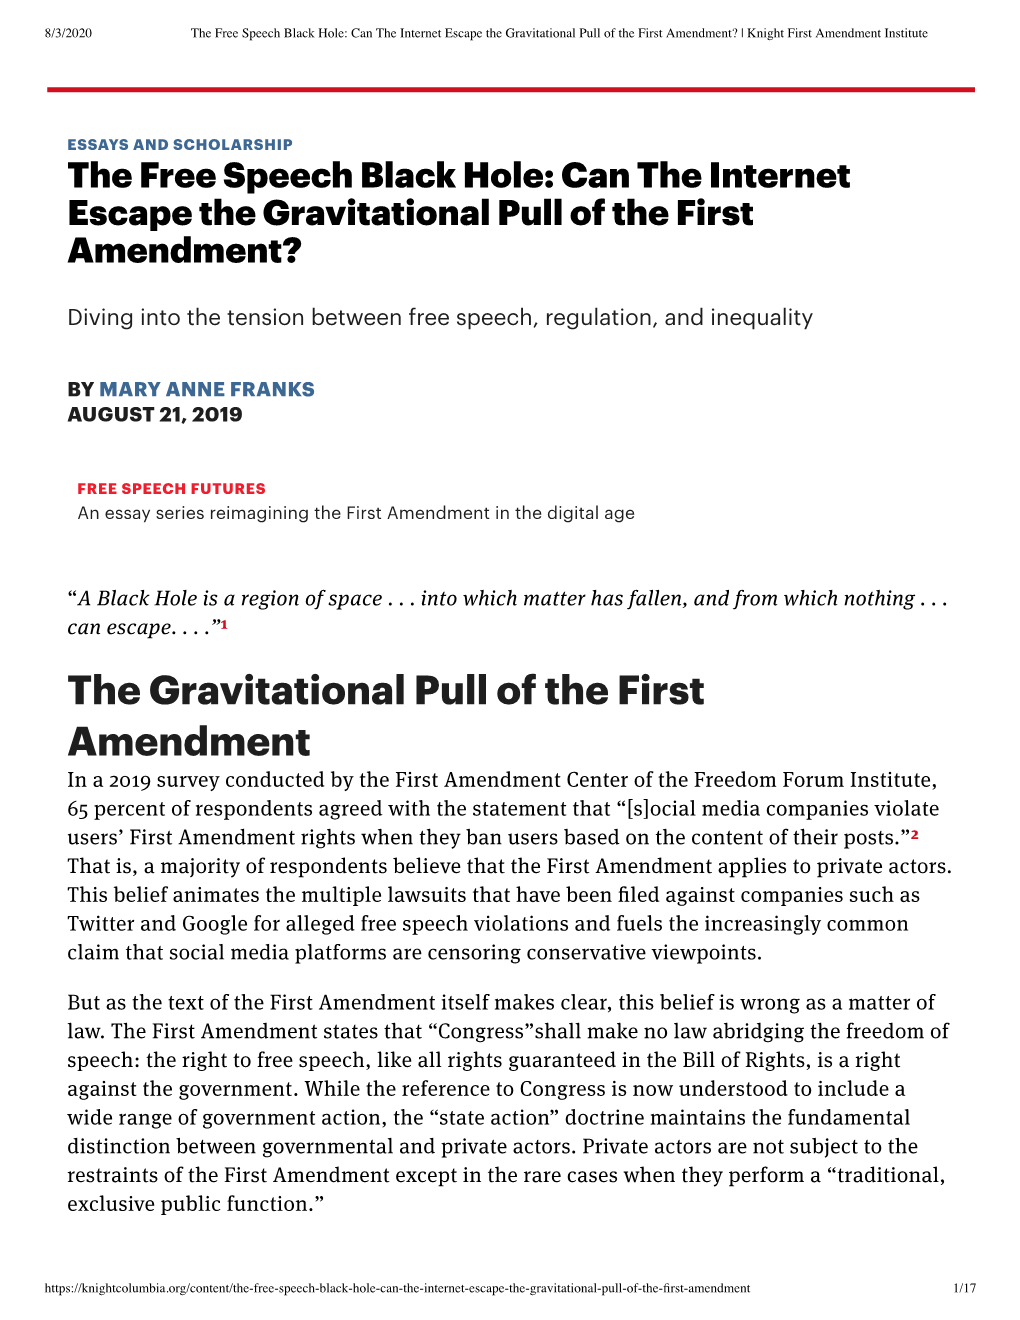 The Gravitational Pull of the First Amendment? | Knight First Amendment Institute